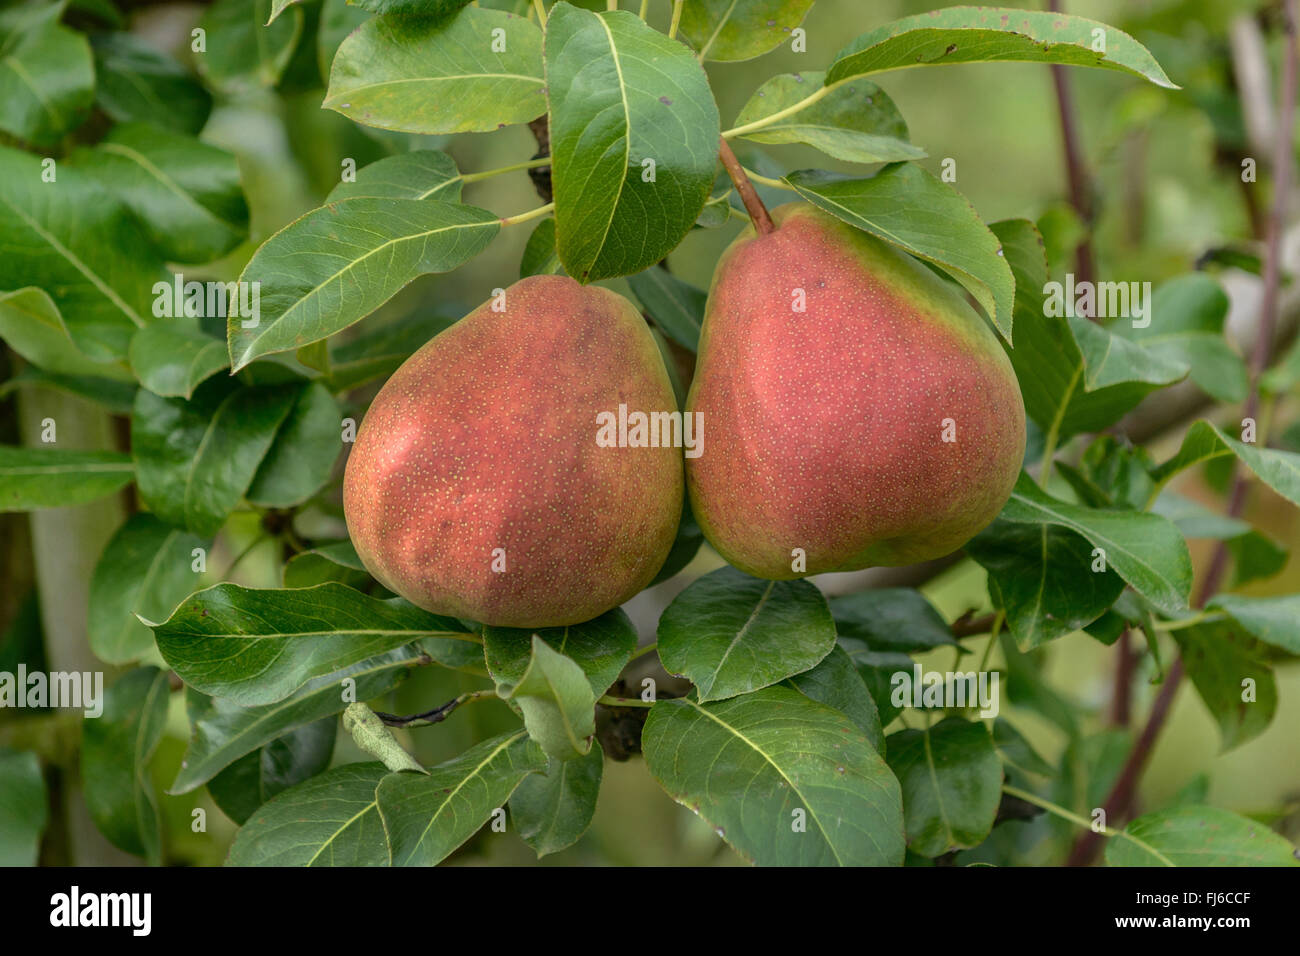 Common pear (Pyrus communis 'Gerburg', Pyrus communis Gerburg), pears on a tree, cultivar Gerburg, Germany Stock Photo